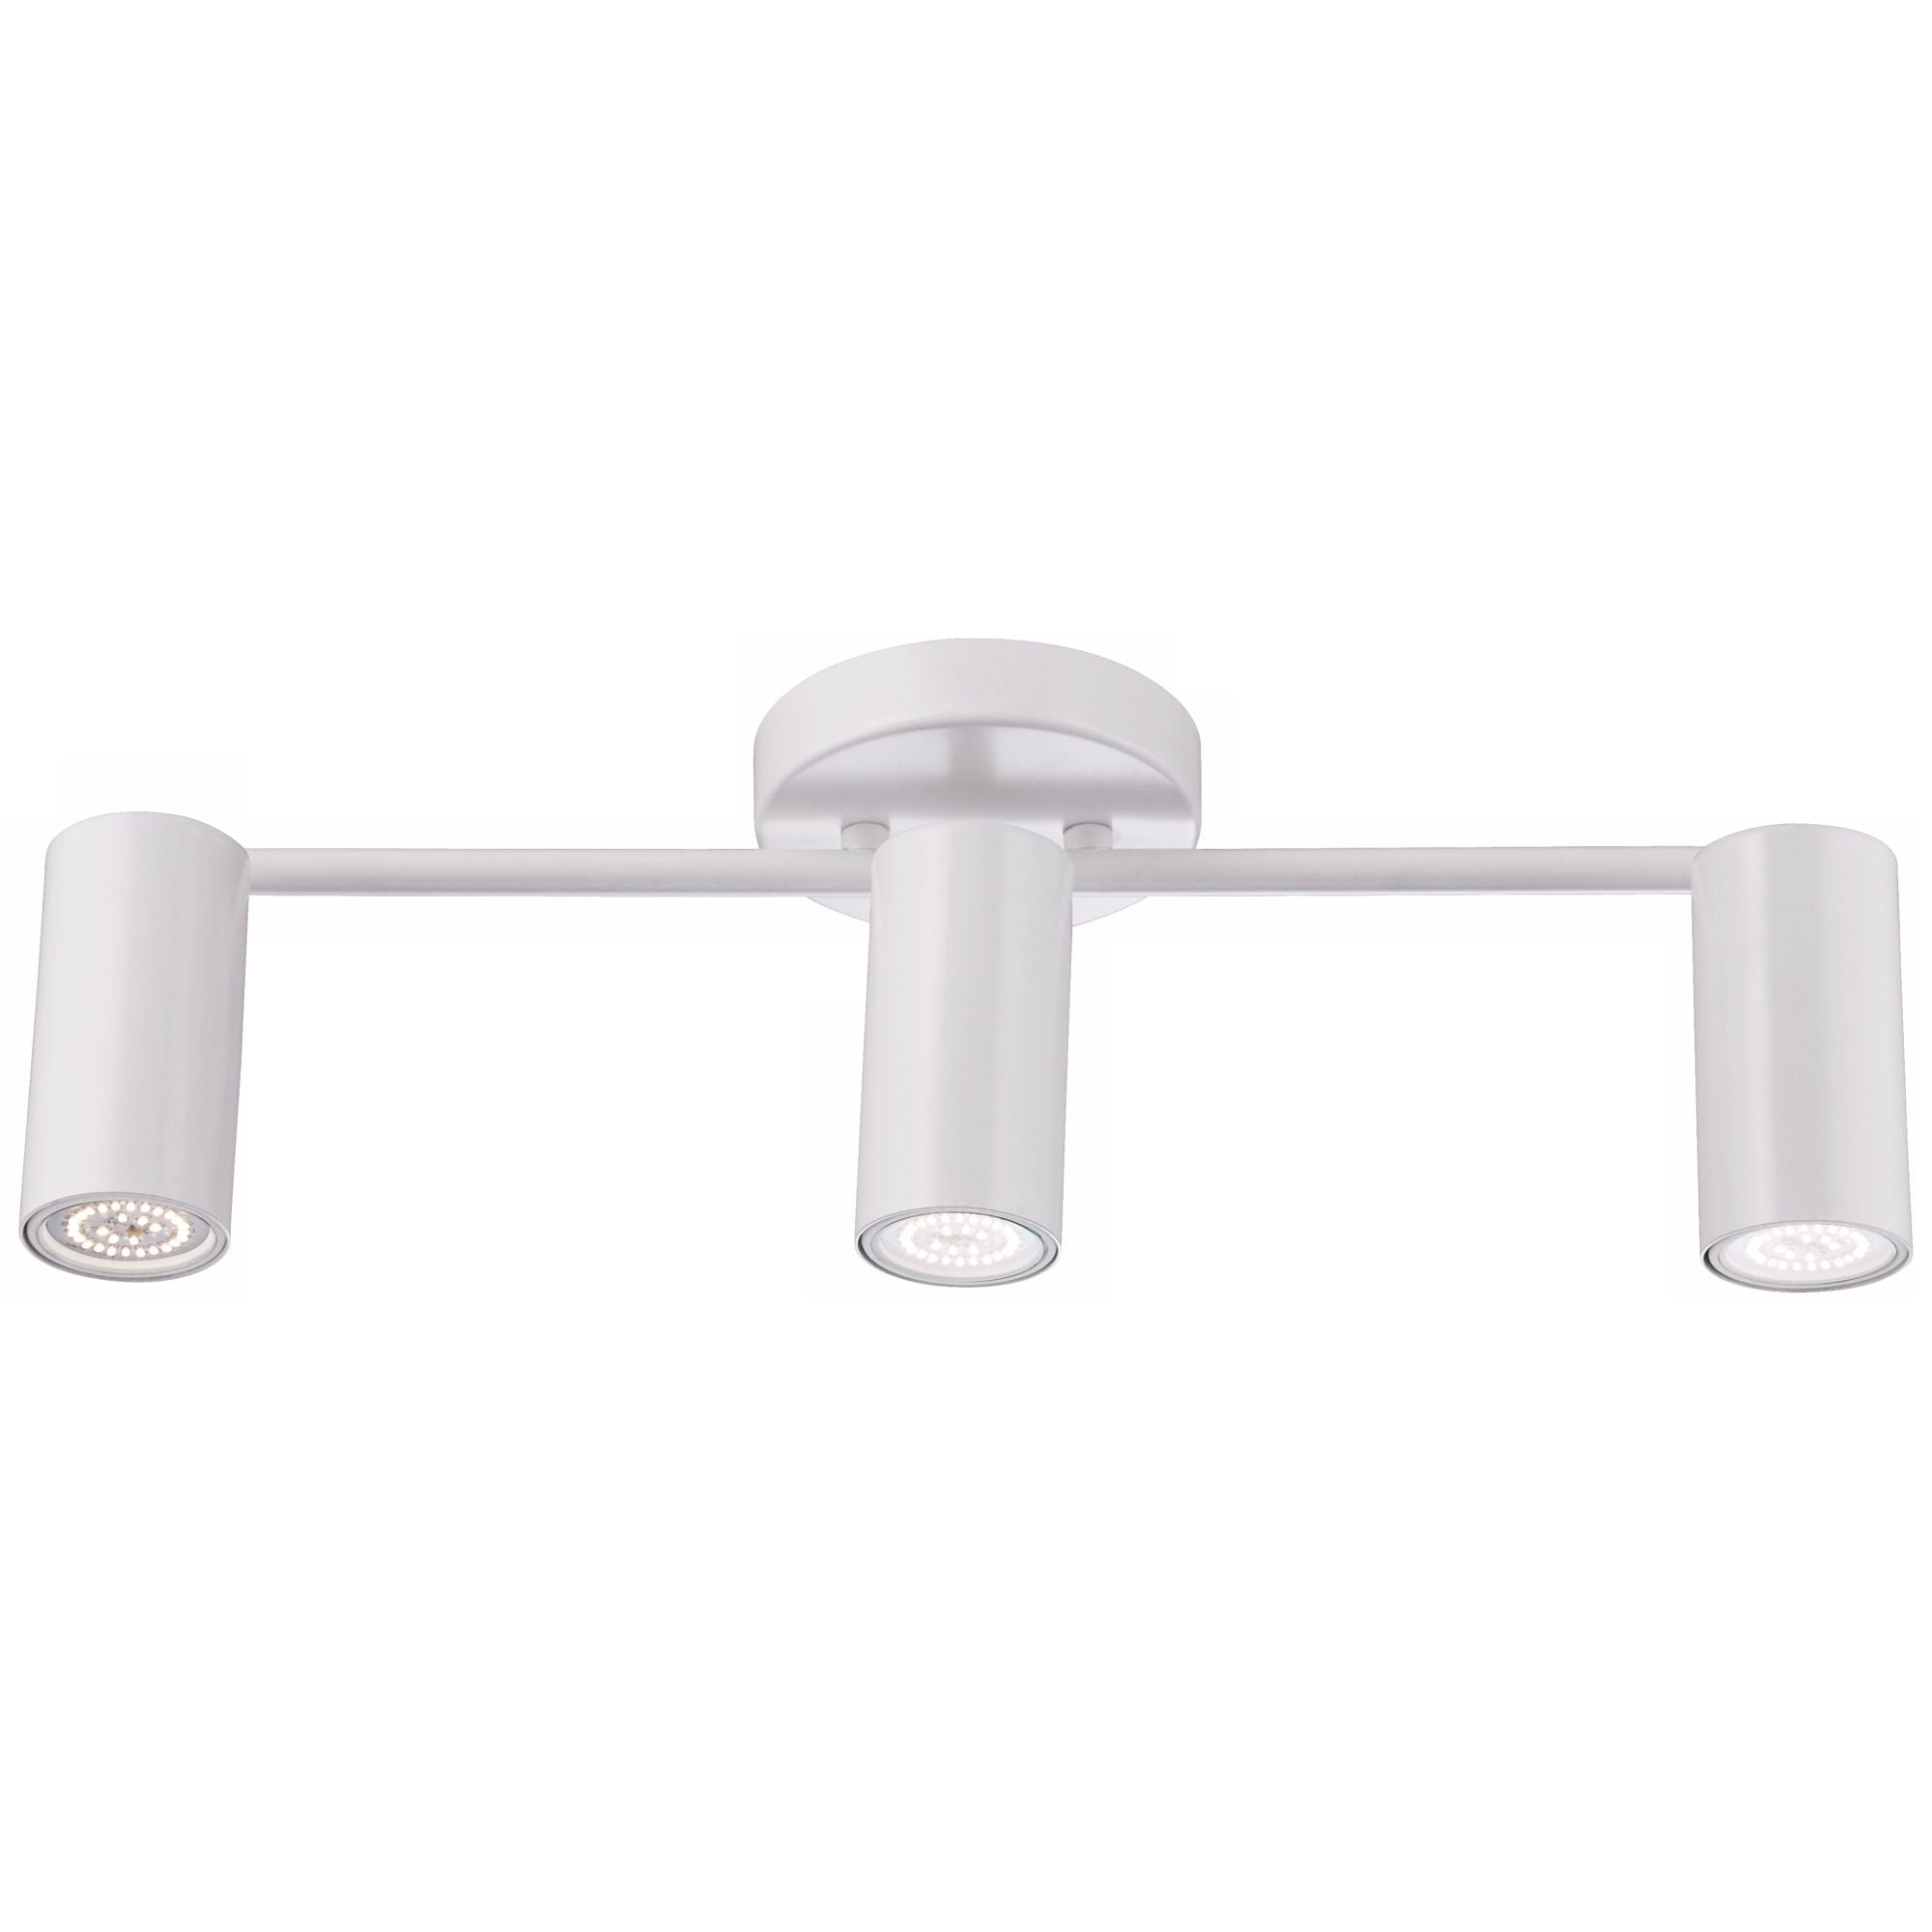 Pro Track Galena 3-Head LED Ceiling Track Light Fixture Kit Spot Light GU10  Dimmable White Modern Kitchen Bathroom 19 1/4